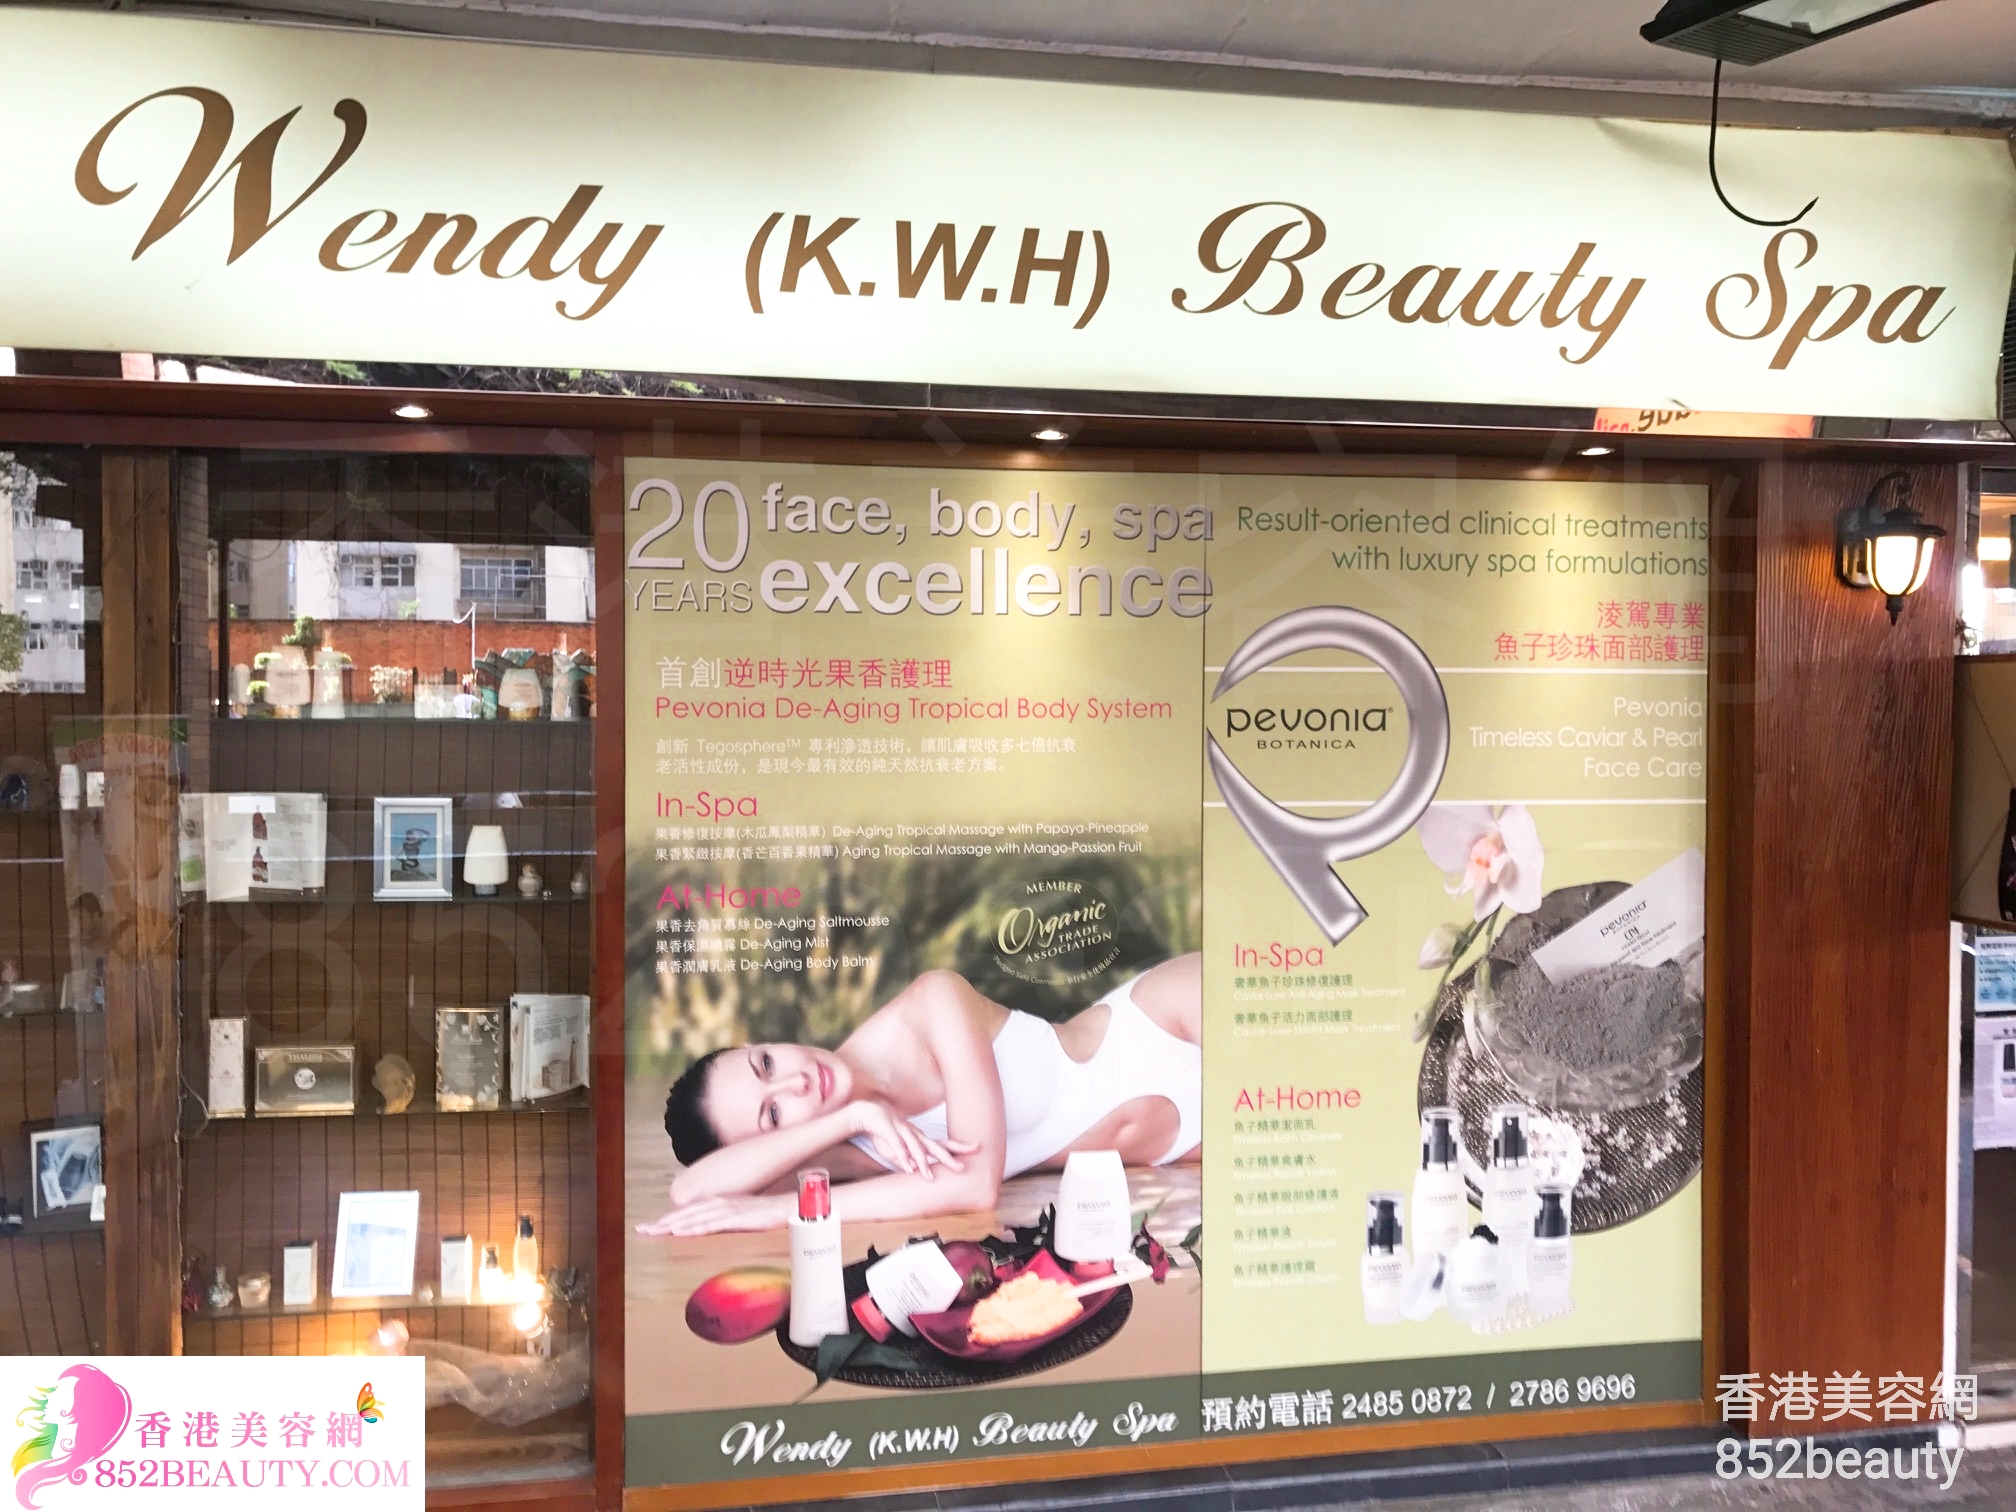 Massage/SPA: Wendy (K.W.H) Beauty Spa